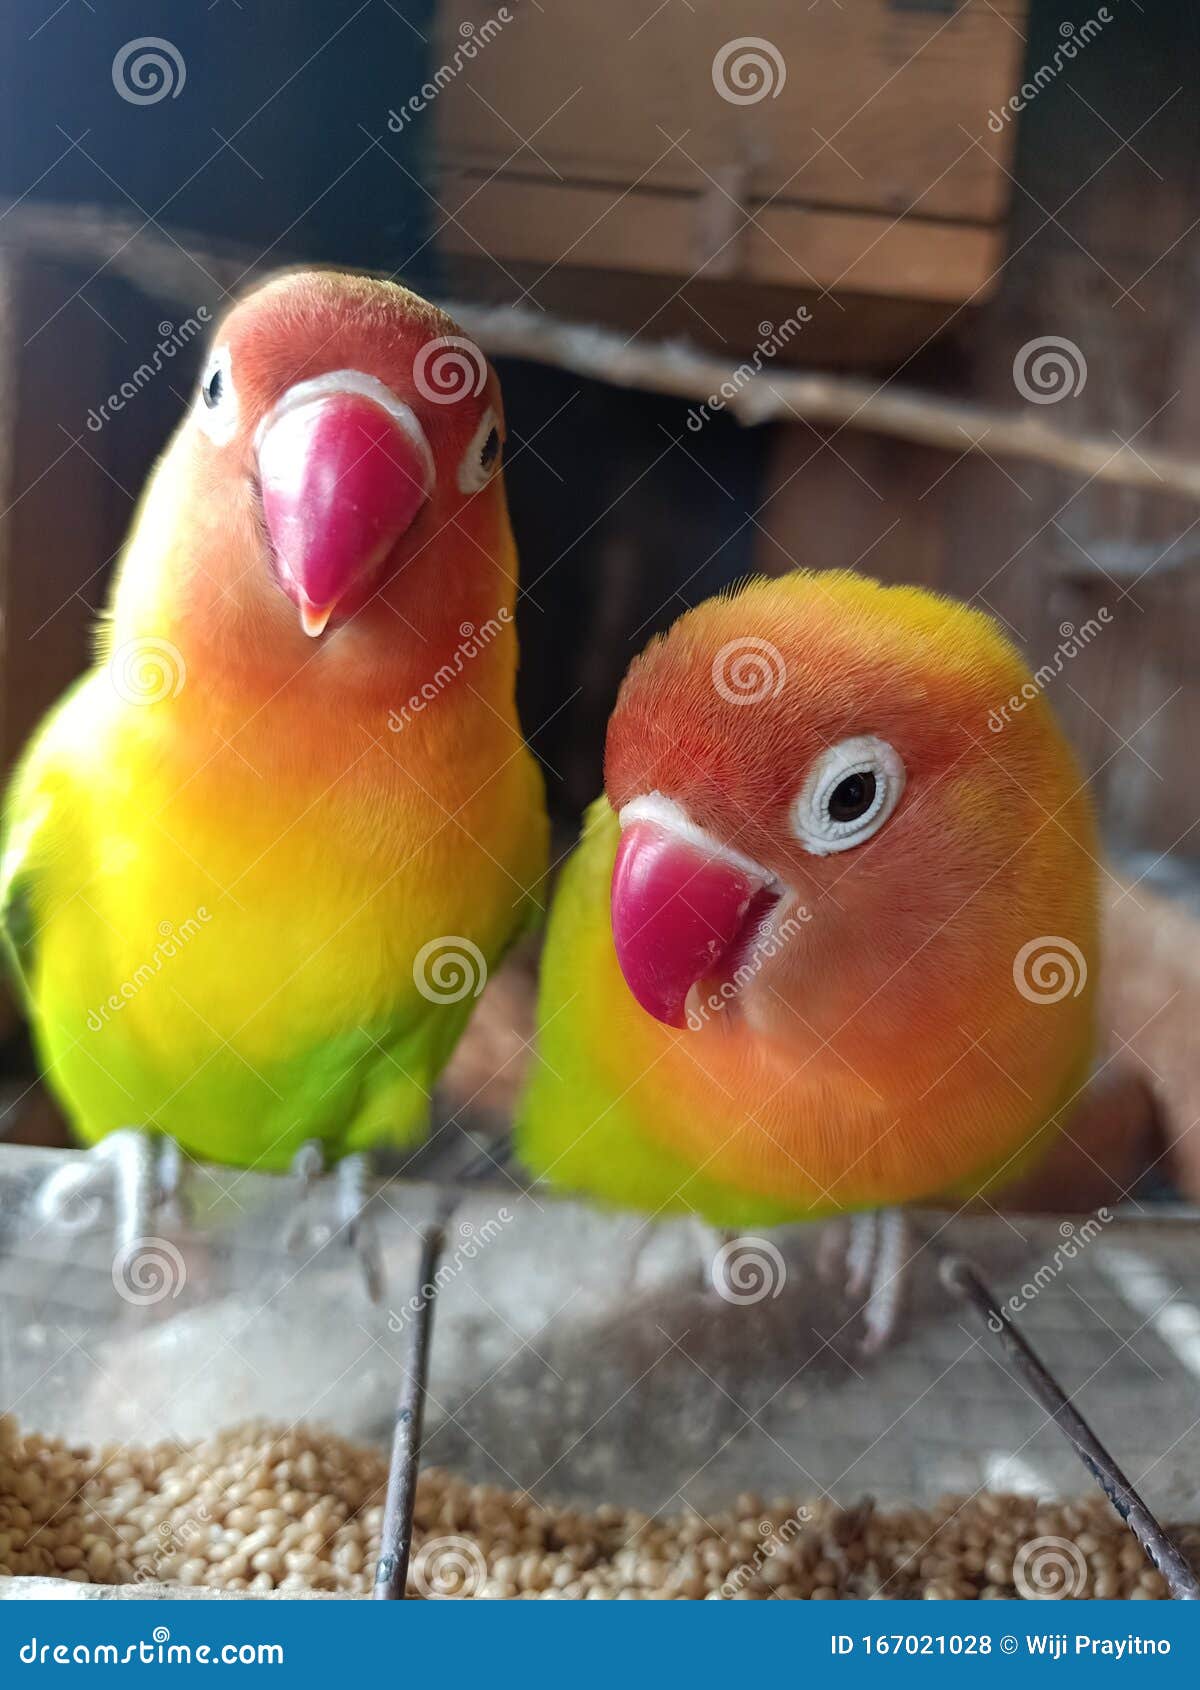 a pair of love birds